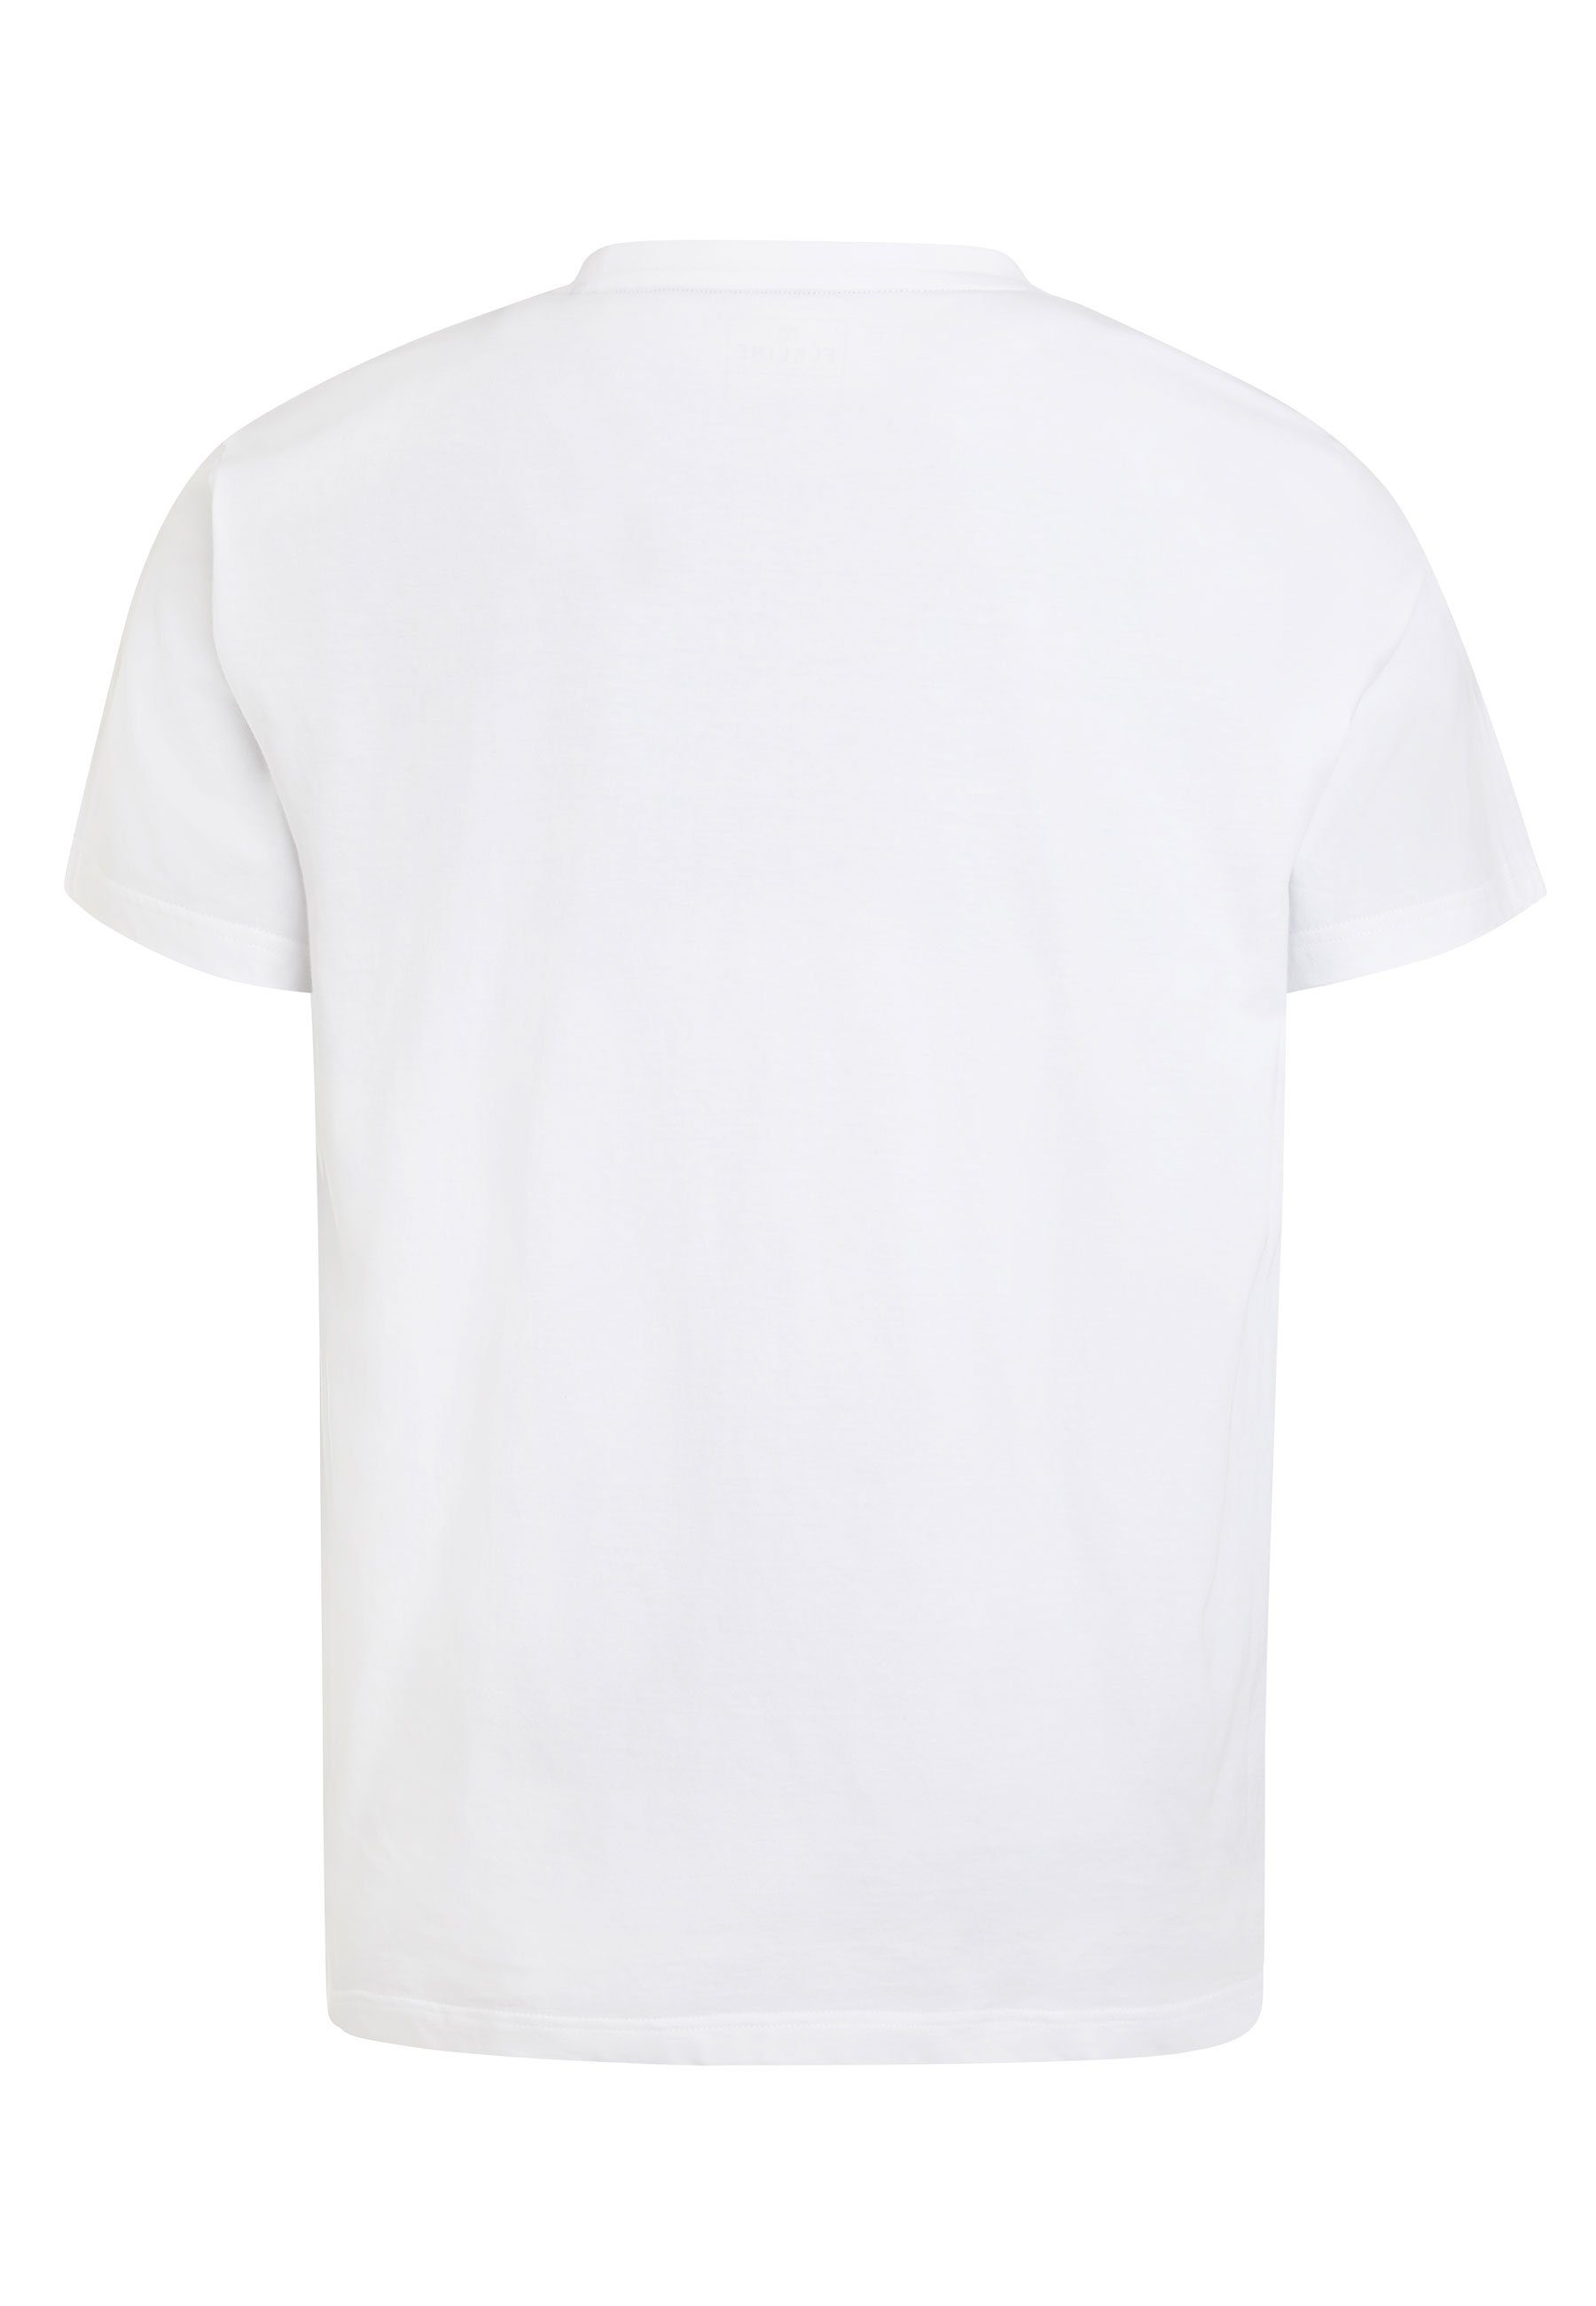 Auto T-Shirt Beside Mainstream White Elkline Brust Print